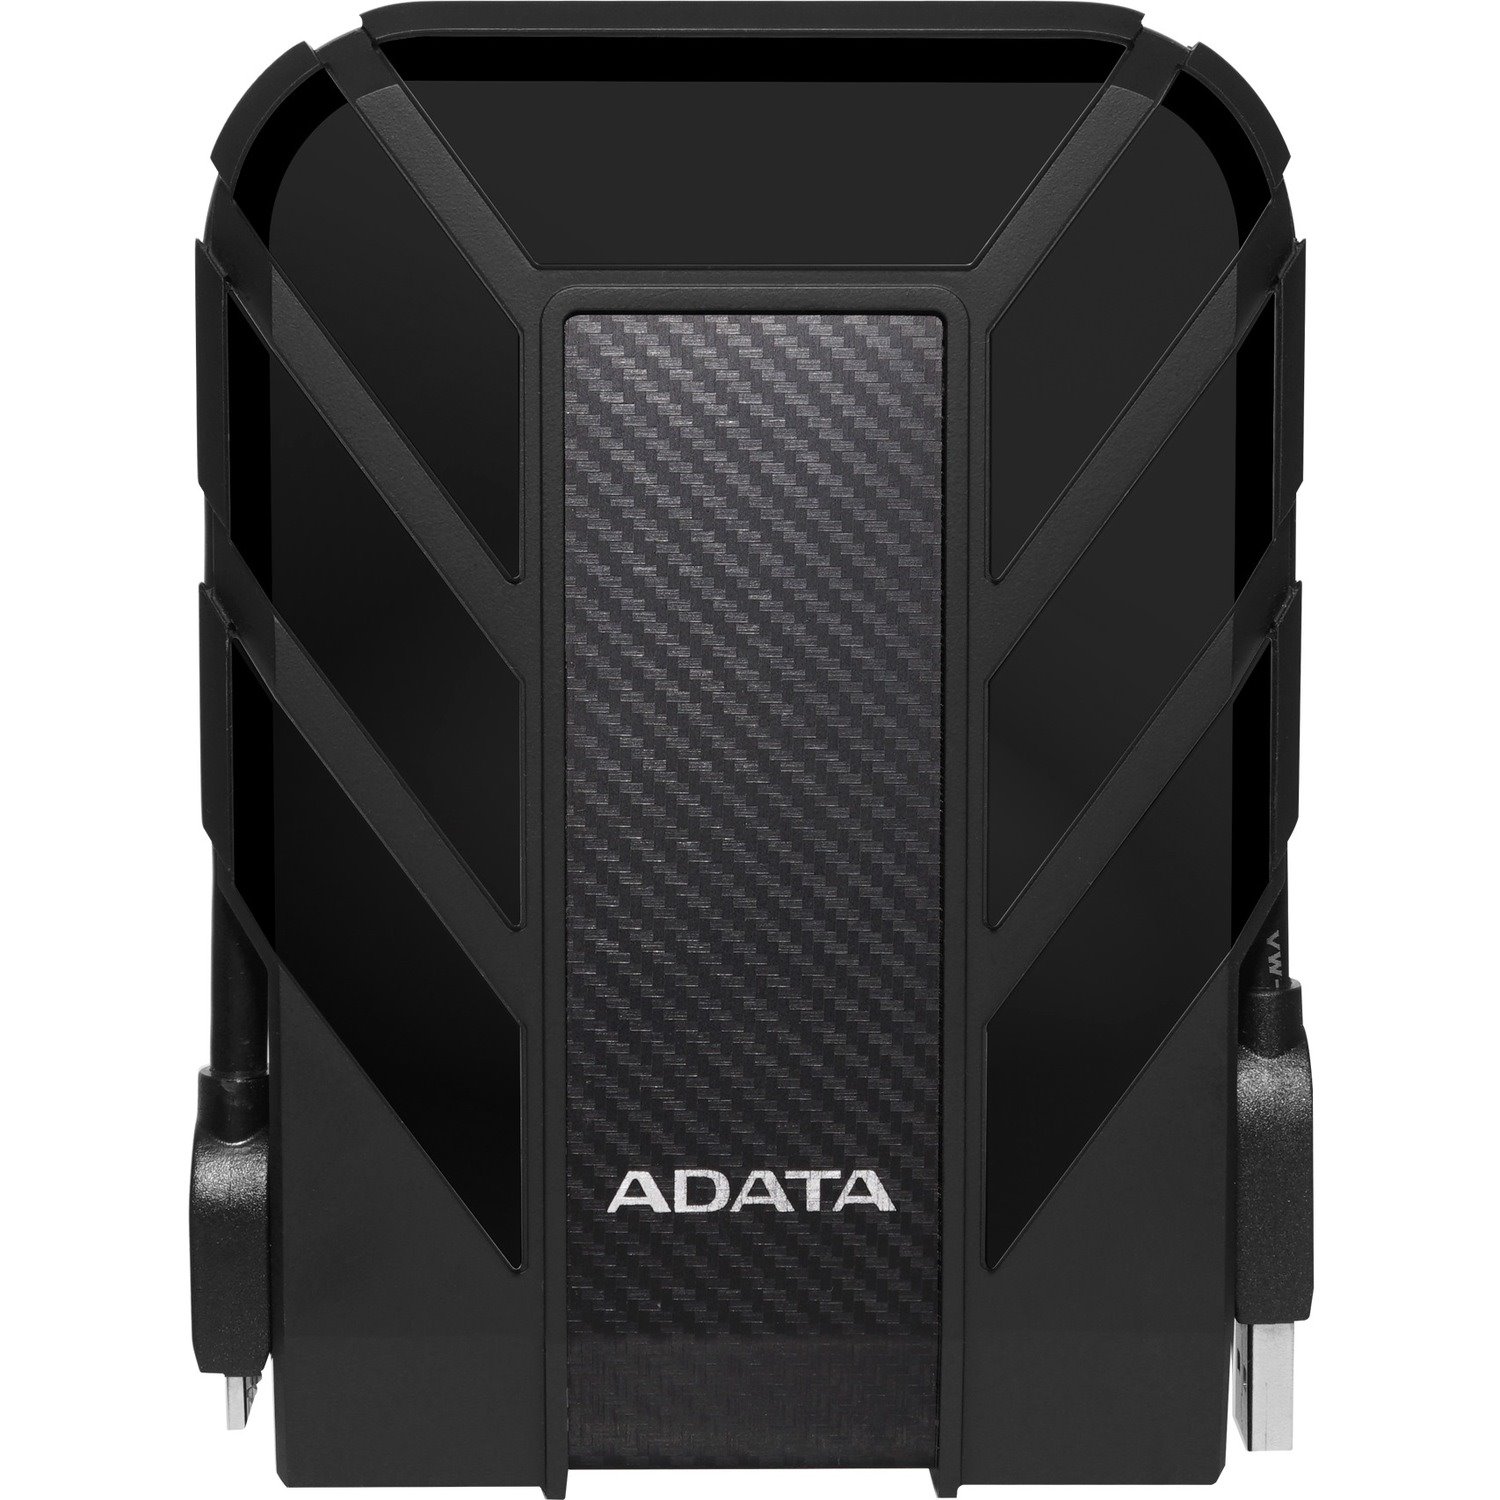 Adata HD710 Pro AHD710P-4TU31-CBK 4 TB Hard Drive - 2.5" External - Black